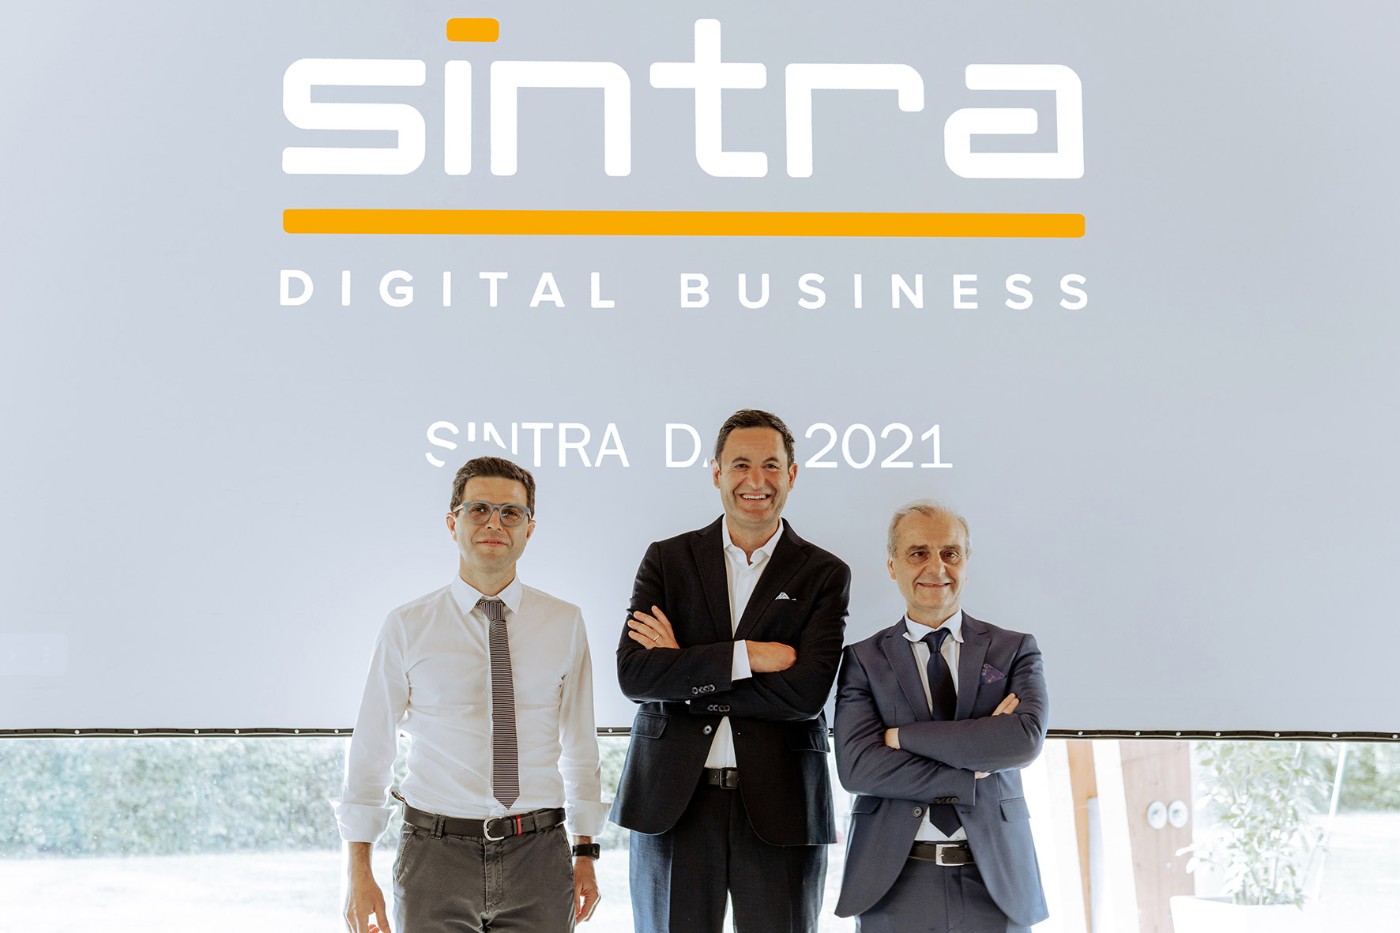 Technoretail - L'e-commerce di Pinalli diventa omnicanale grazie a Sintra Digital Business 